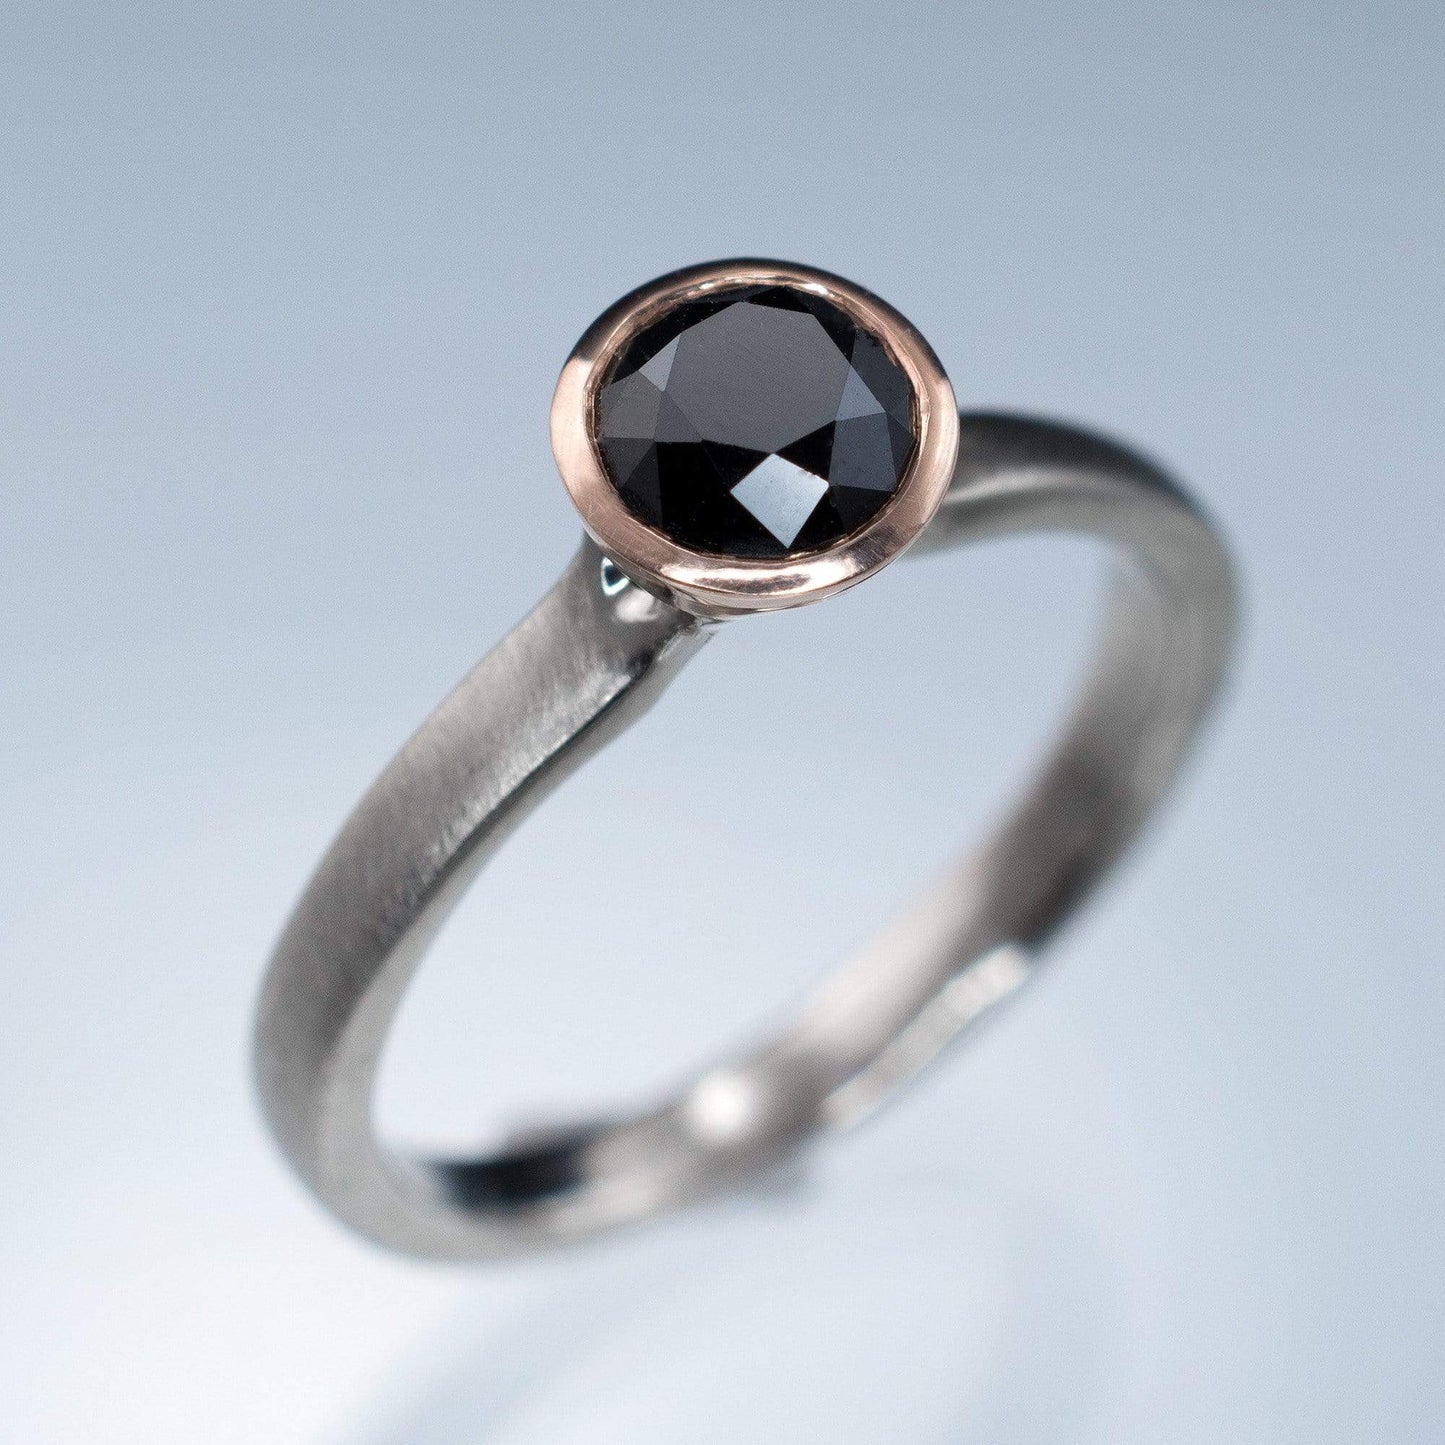 Mixed Metal Black Diamond Bezel Solitaire Engagement Ring 0.5ct Black Diamond / 14k Rose Gold Ring by Nodeform